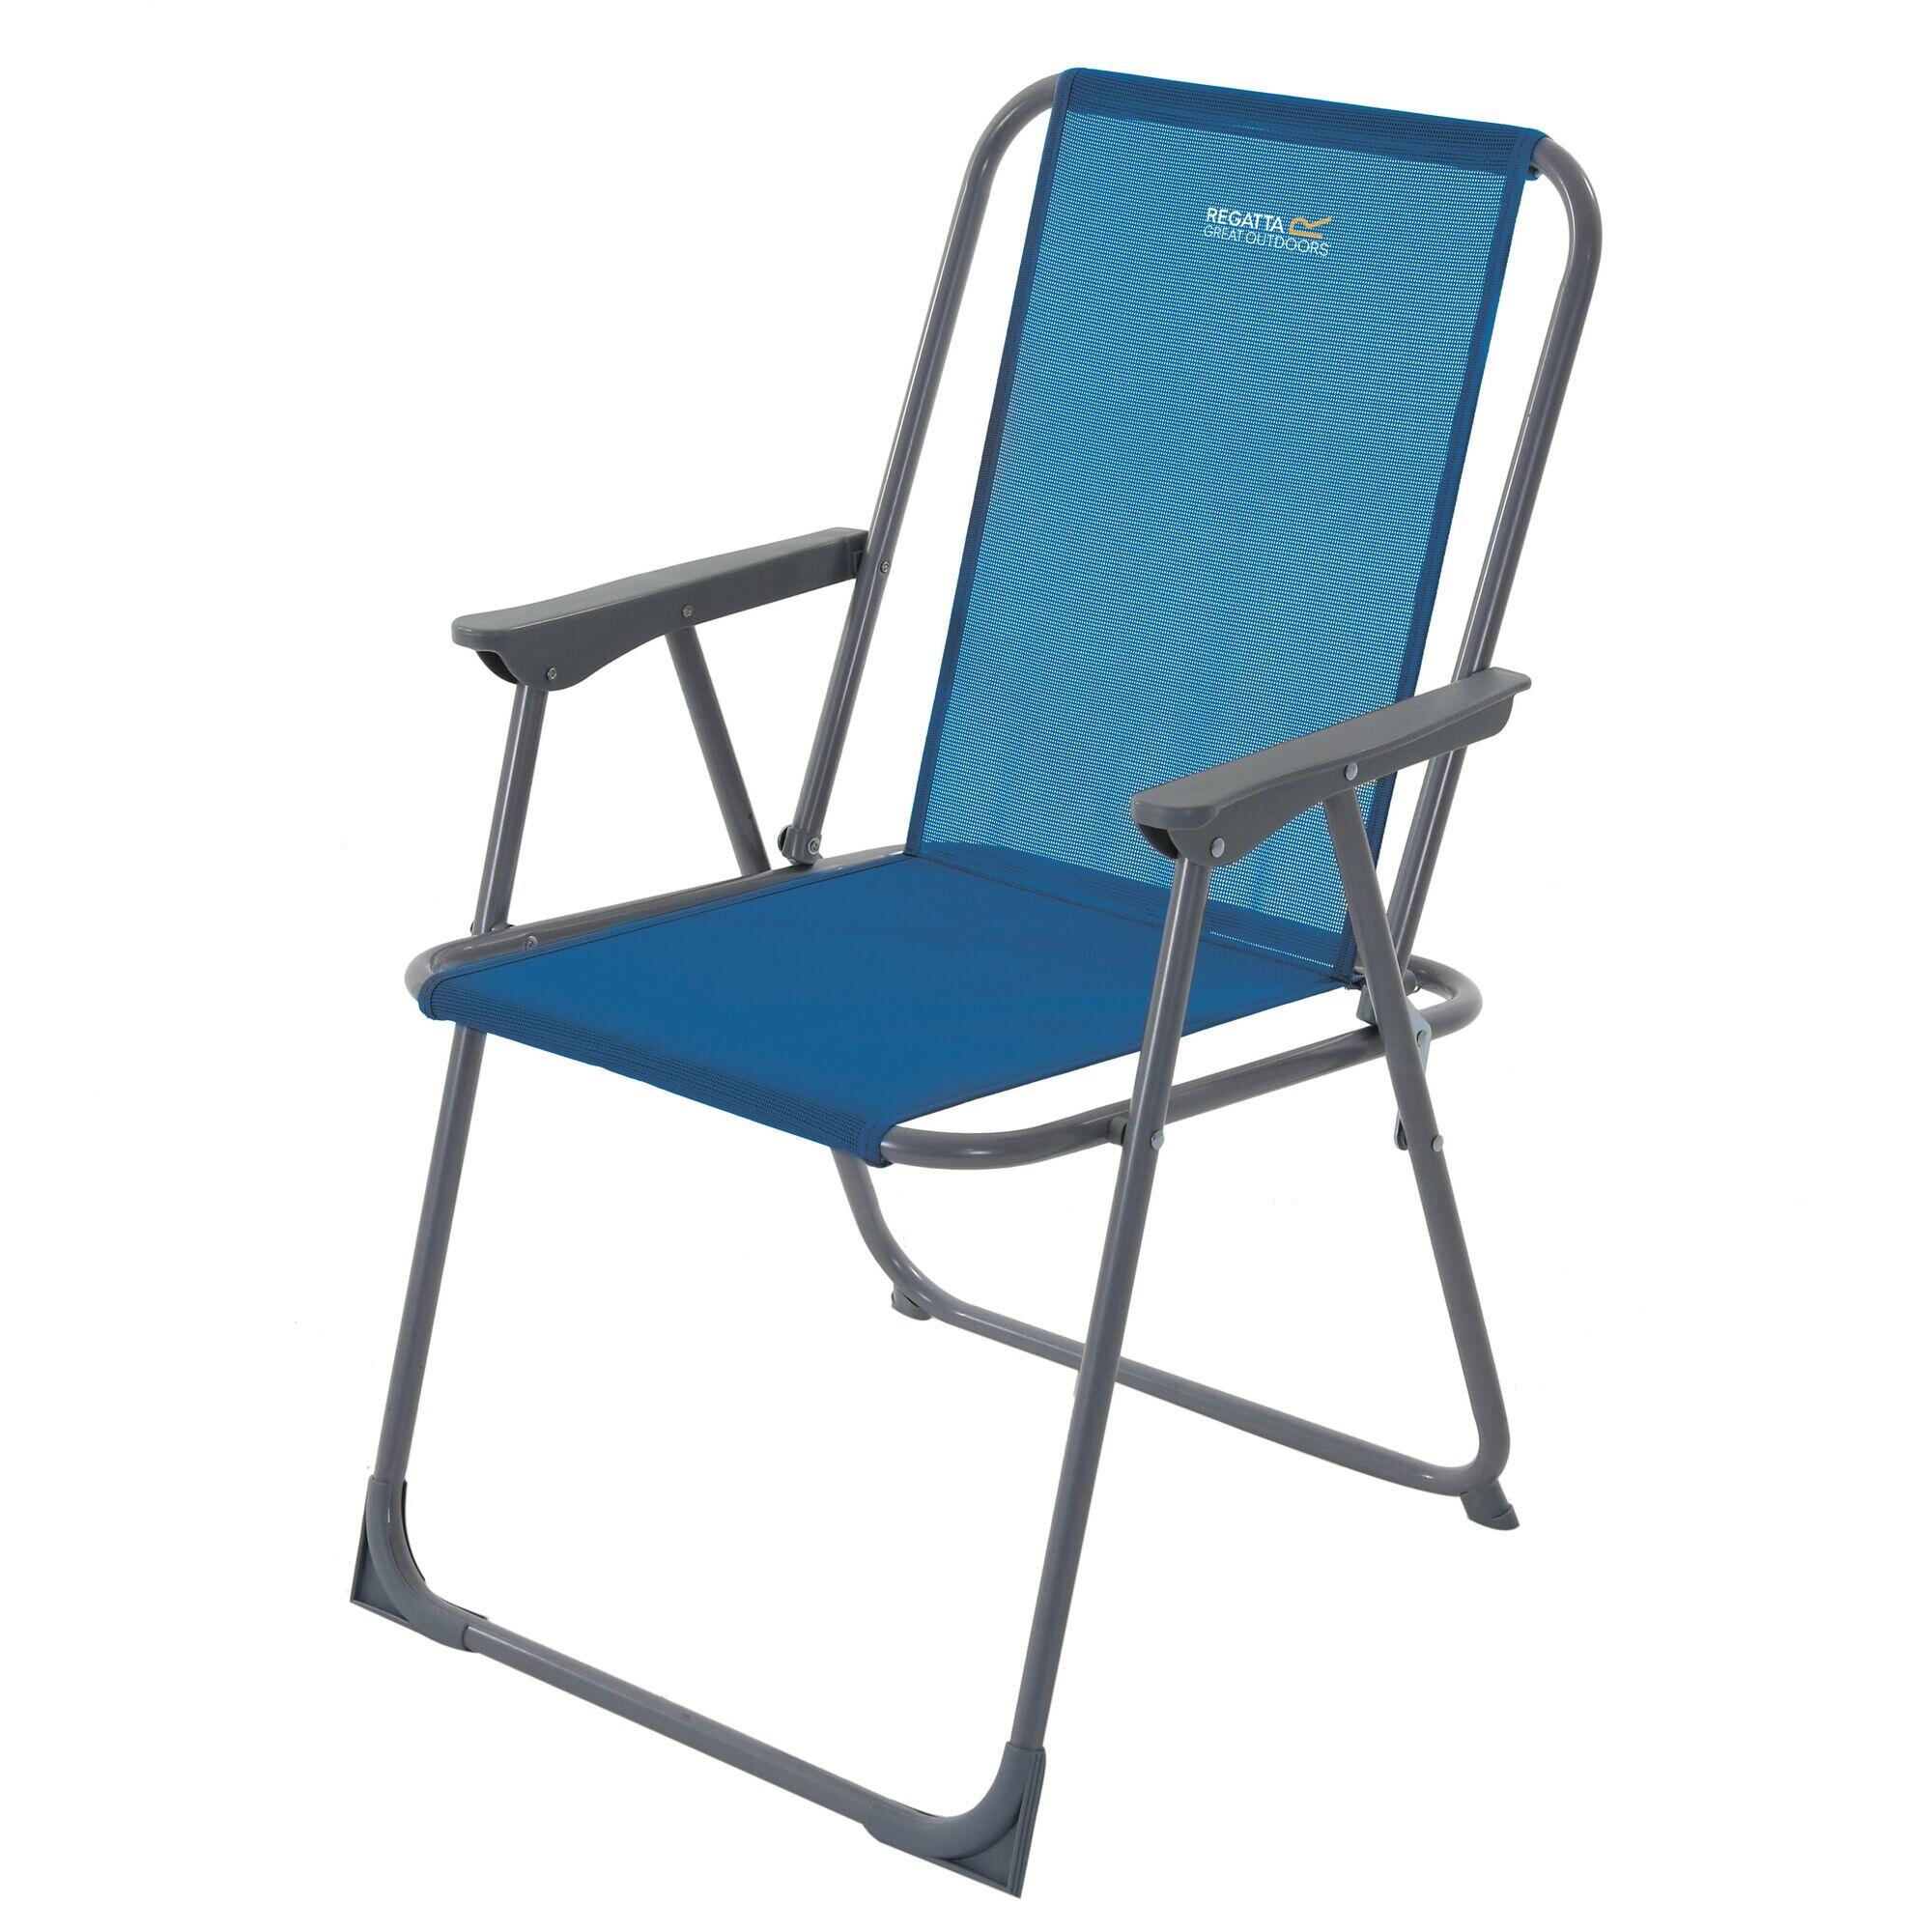 Retexo Adults' Camping Chair - Oxford Blue 1/4